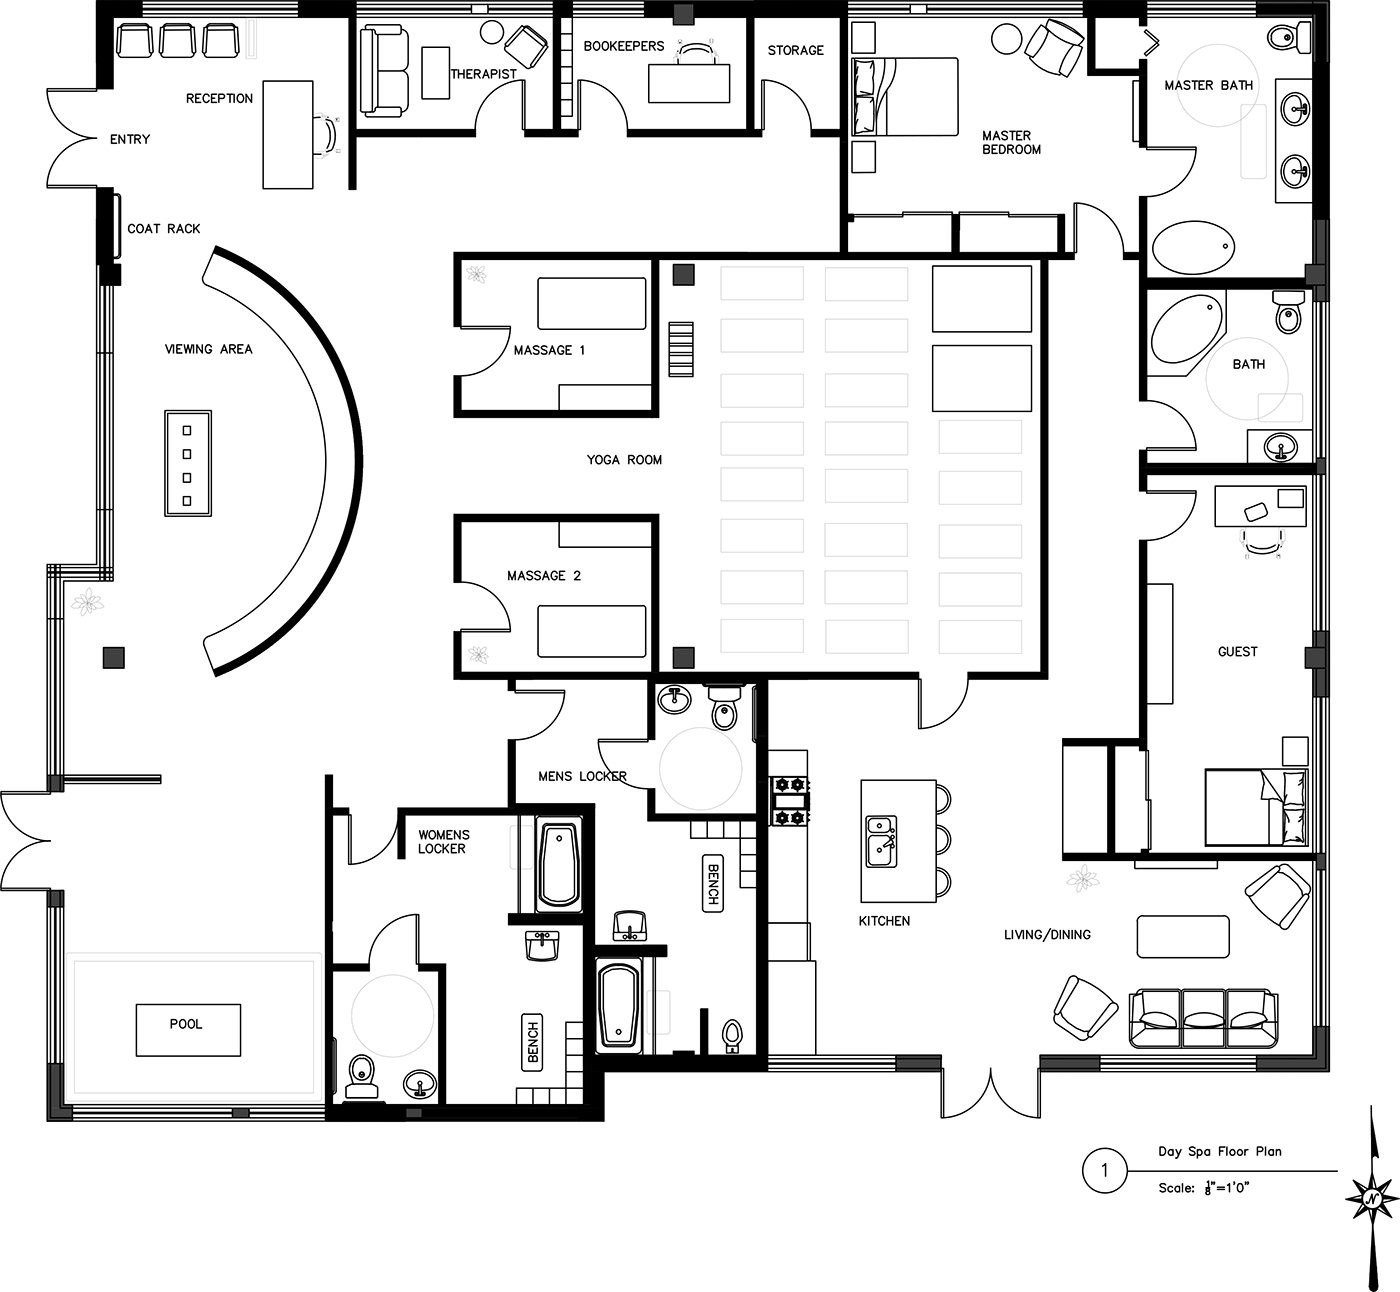 Day Spa/Residential Floor Plan on Behance